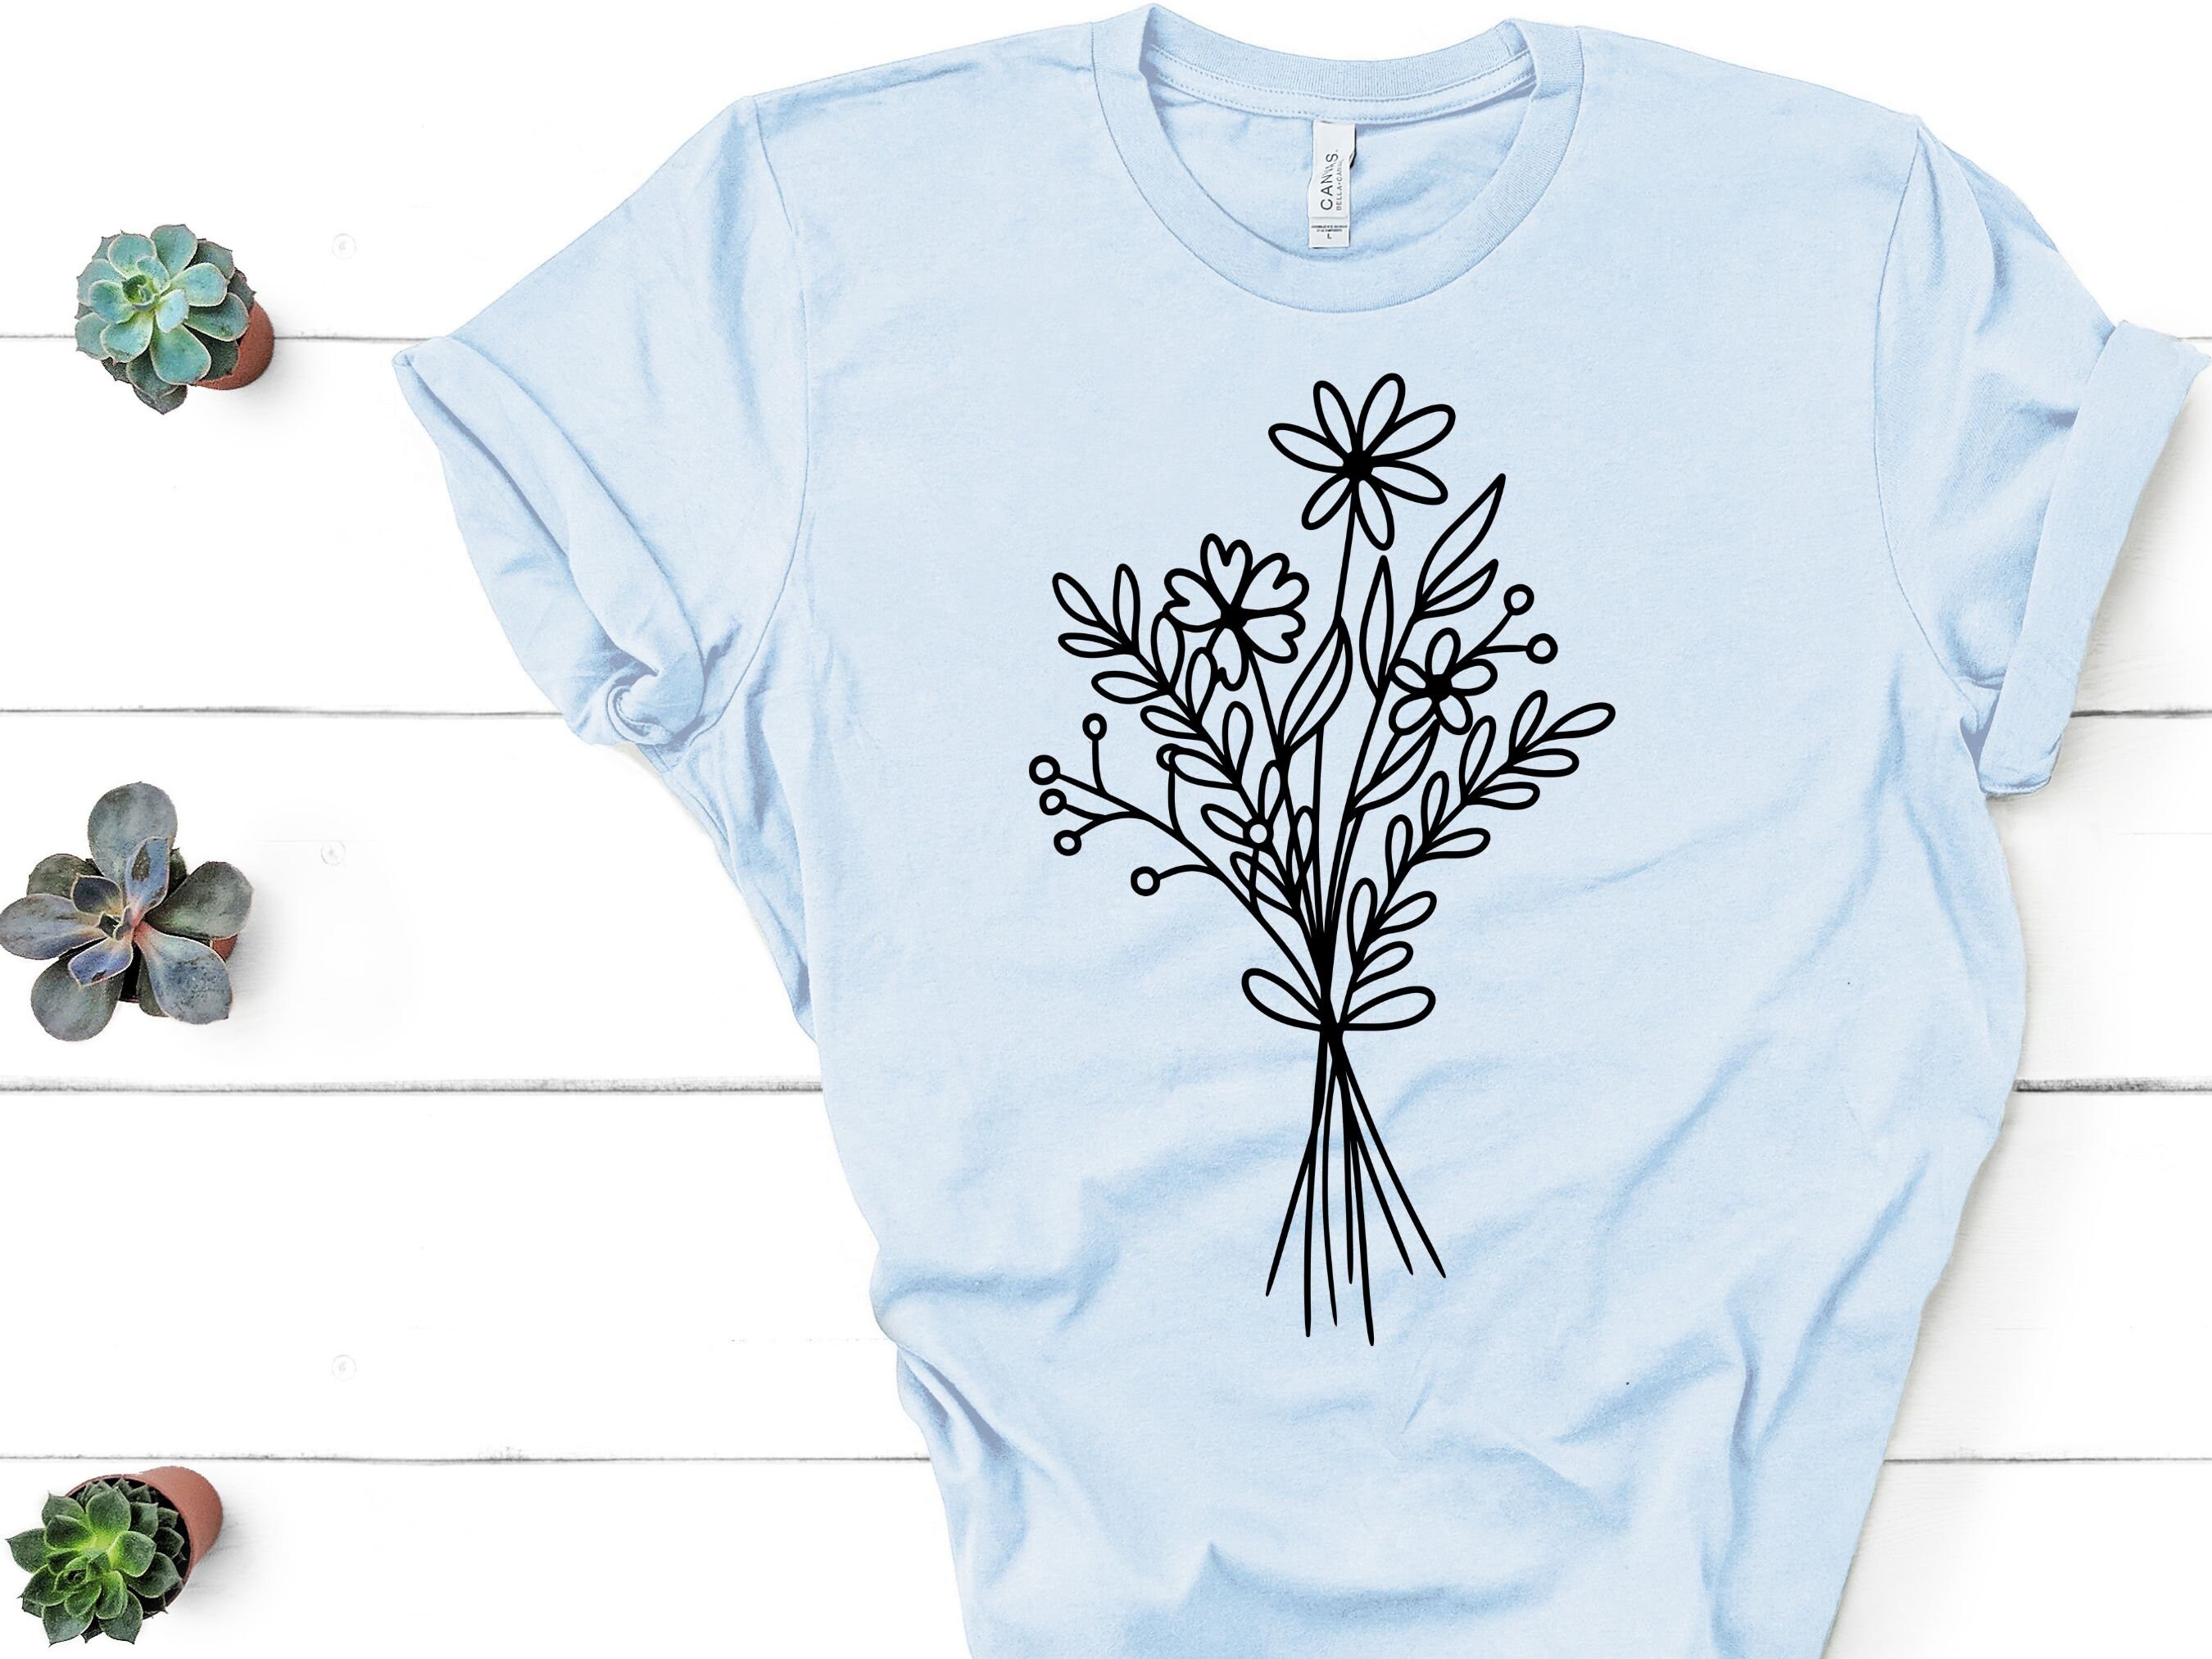 Spring Flowers SVG Bundle. T shirts Designs. (1246484)